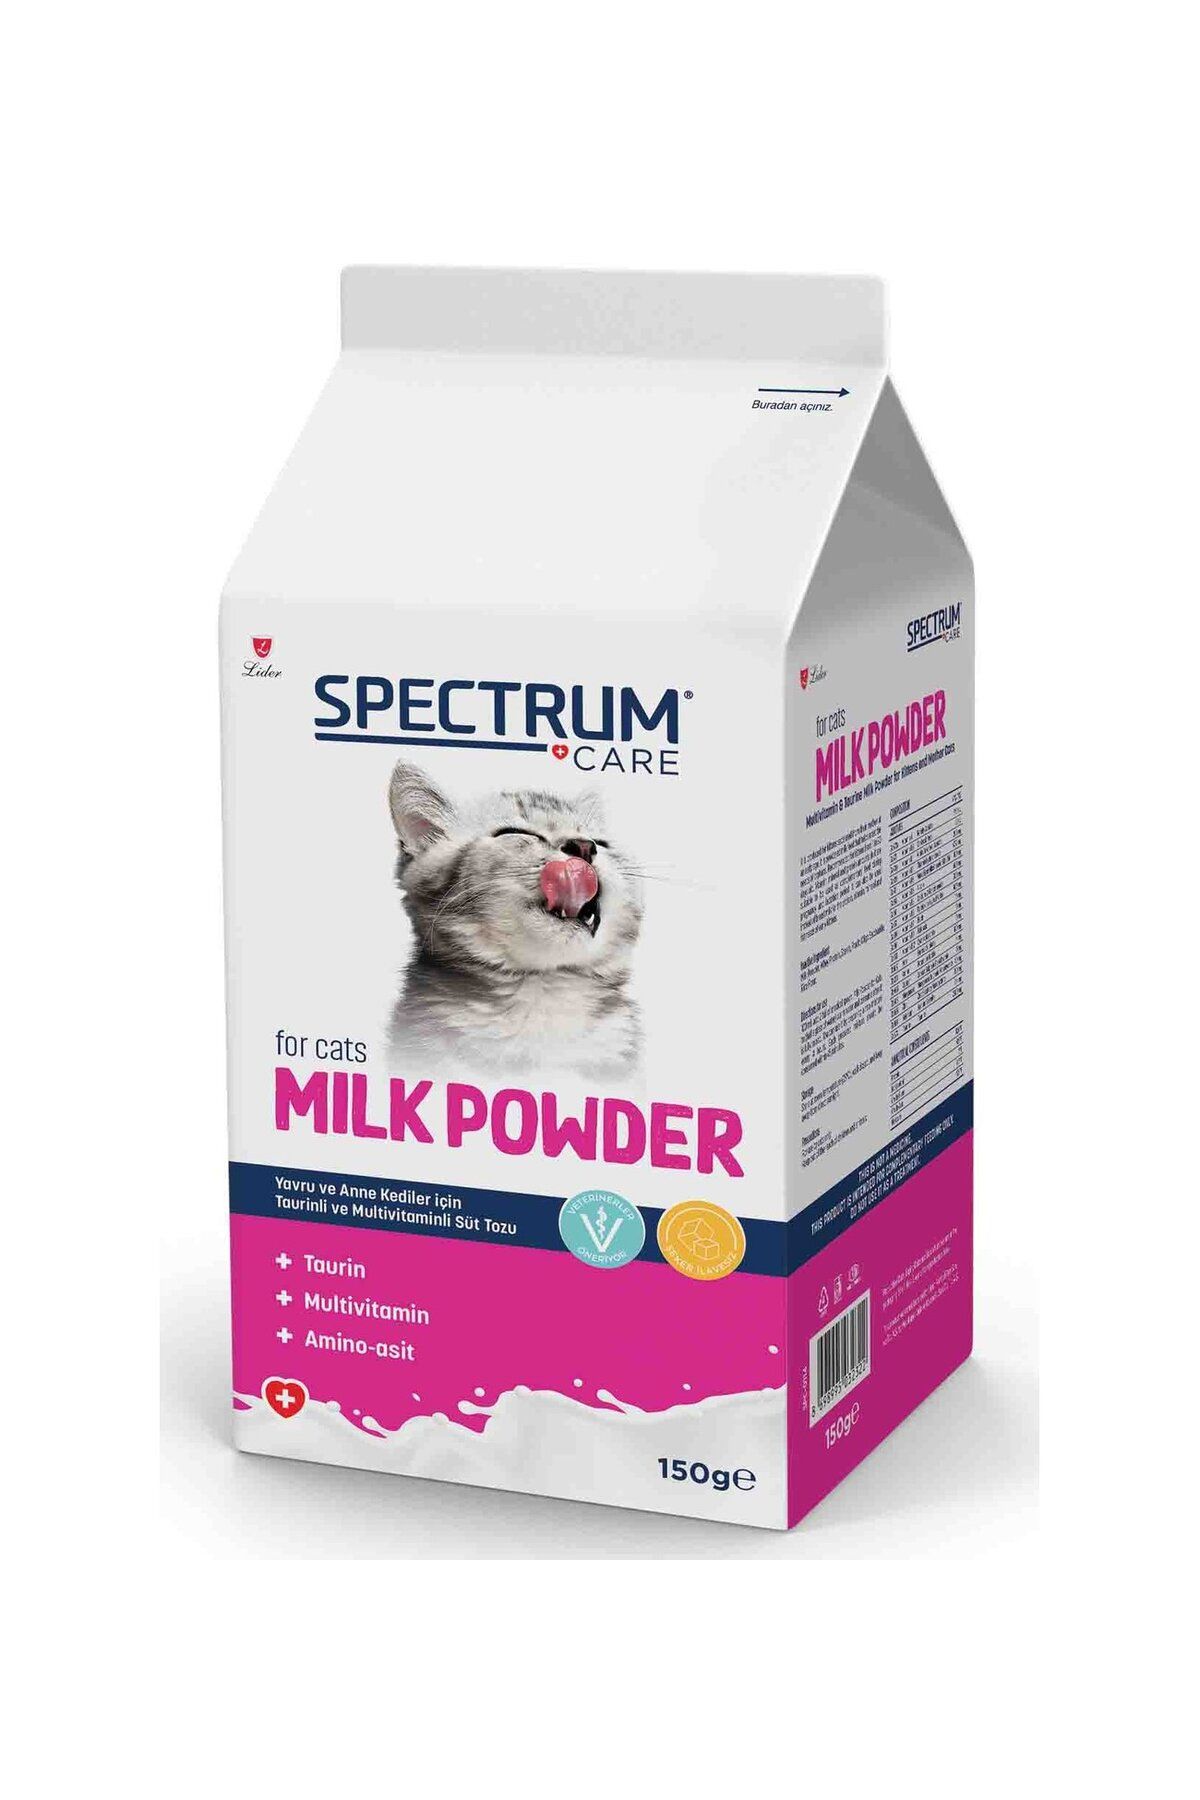 Lider Spectrum Yavru Köpek süt tozu hamile süt tozu yavru köpek destek sütü multivitamin